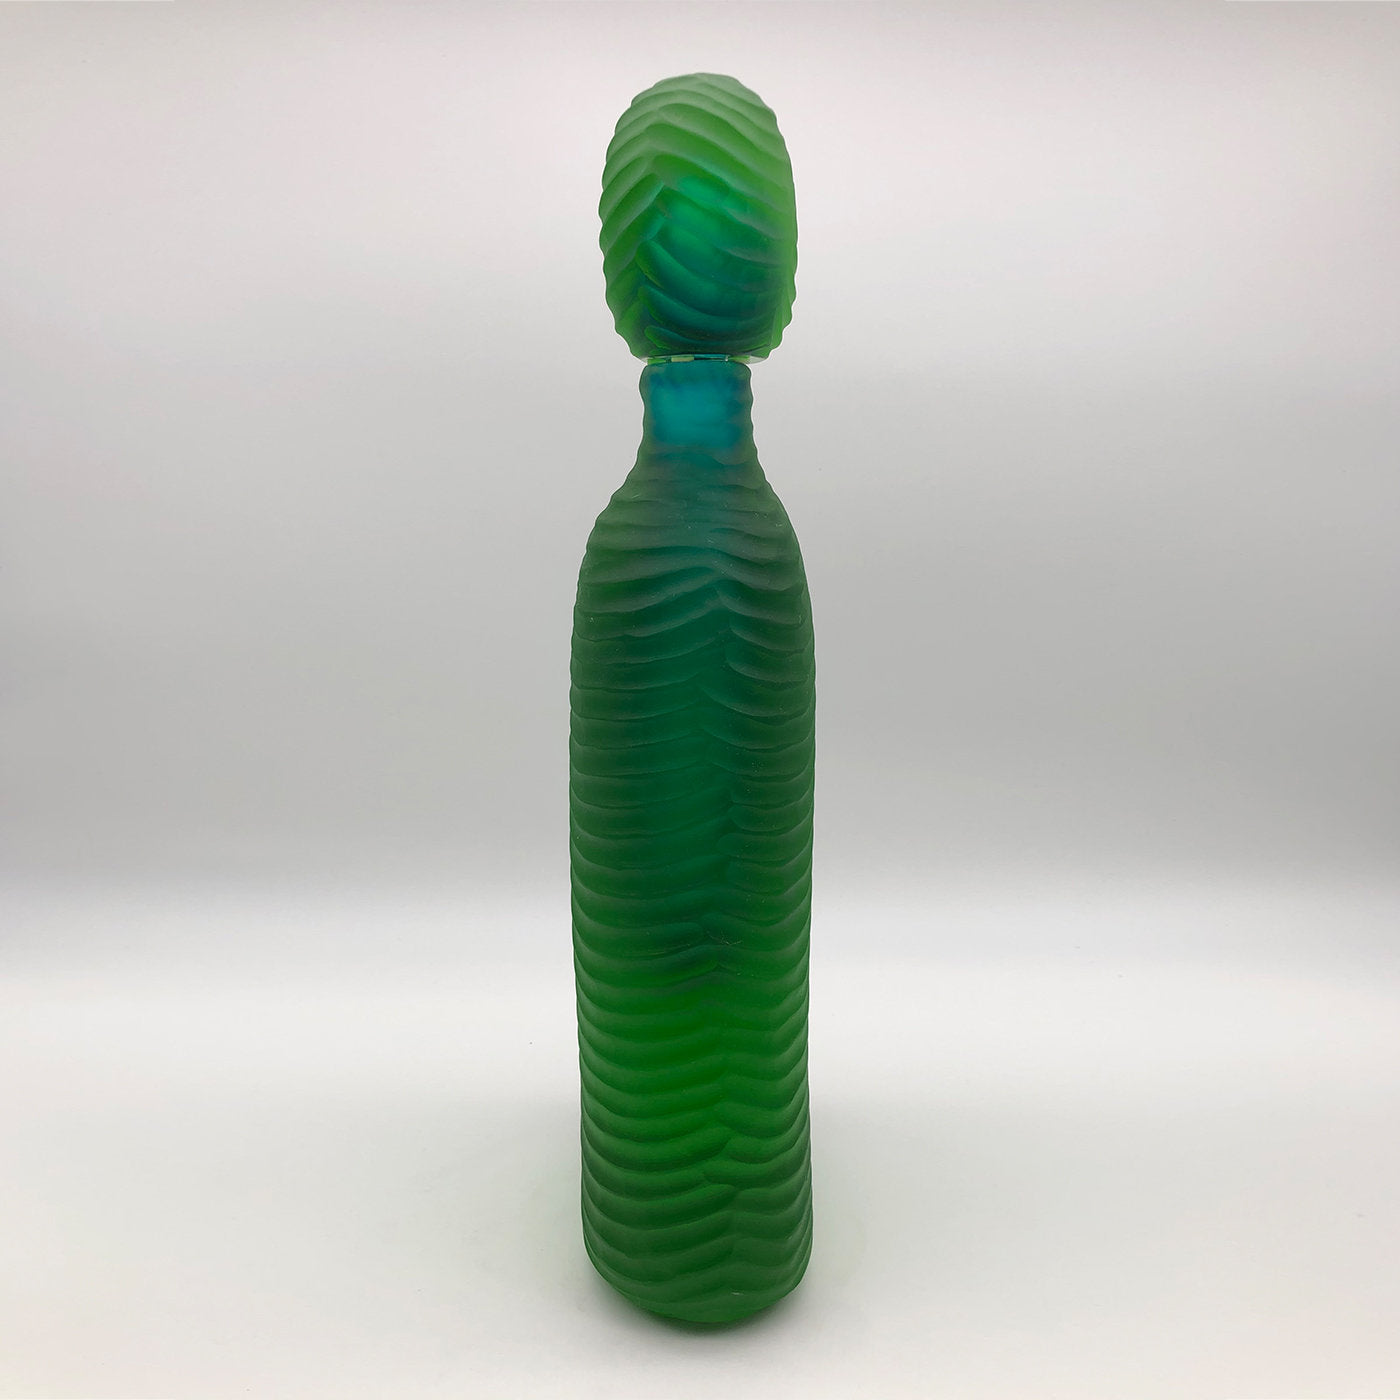 Green Bottle by Toso Cristiano and Renzo Vianello - Alternative view 2